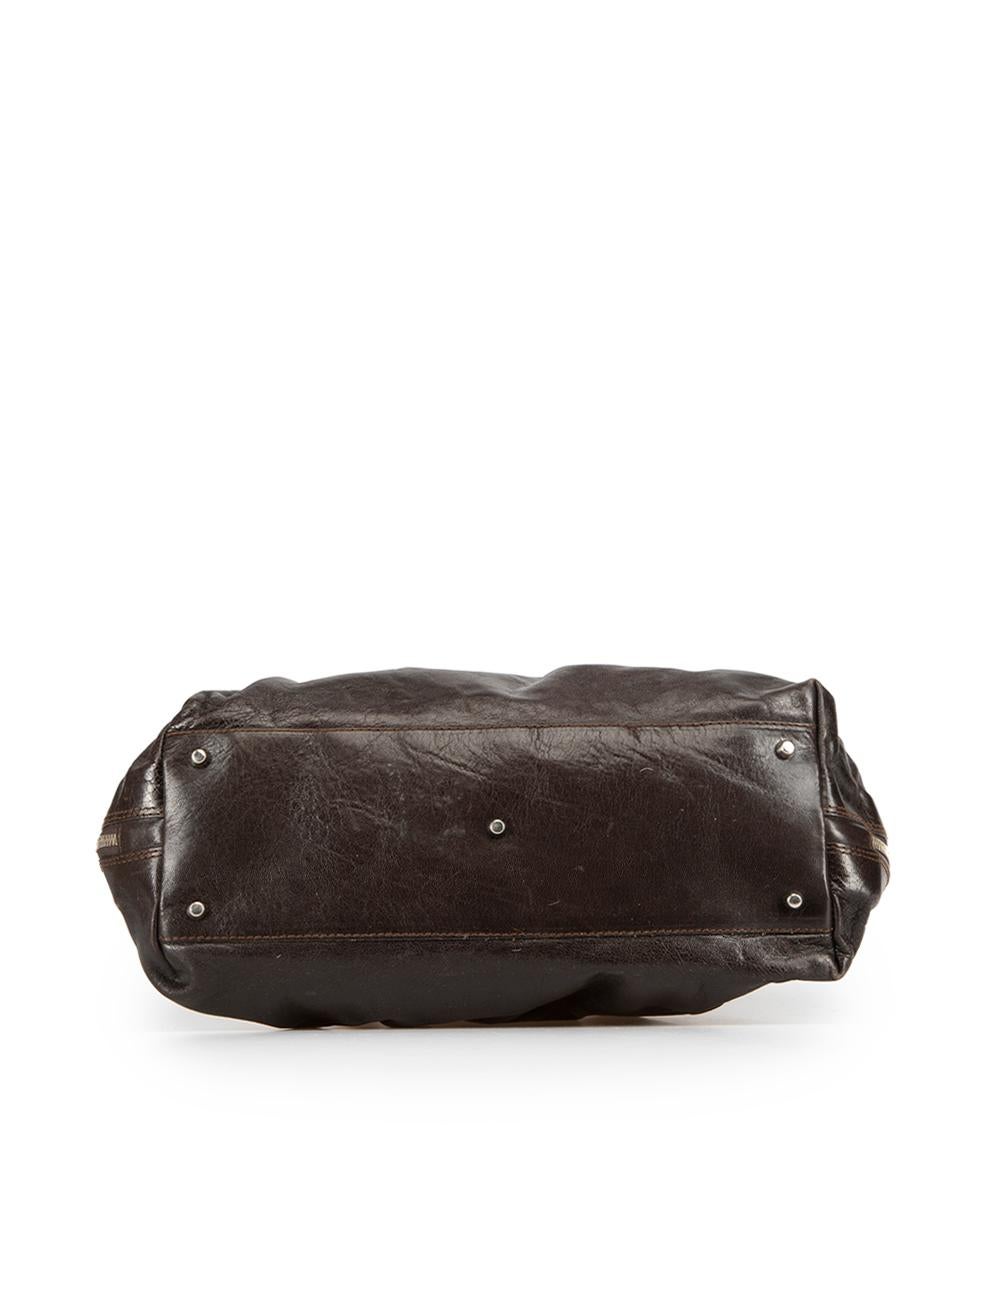 Furla Women's Brown Leather Bowler Handbag 1